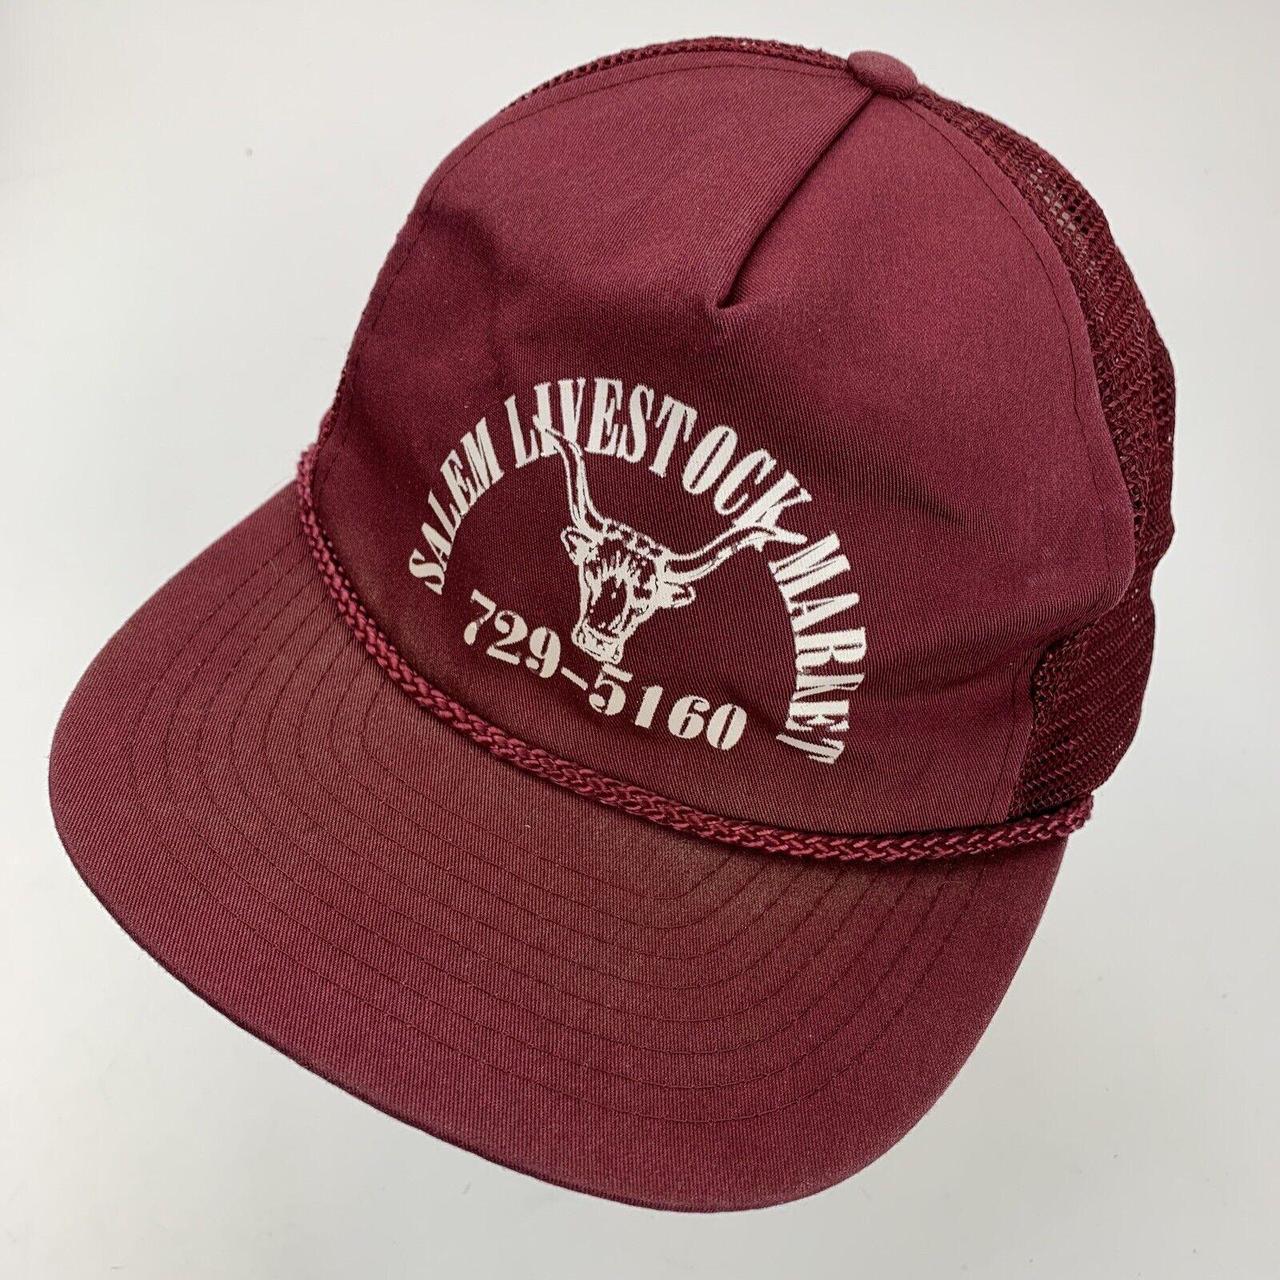 Market Men's Hat